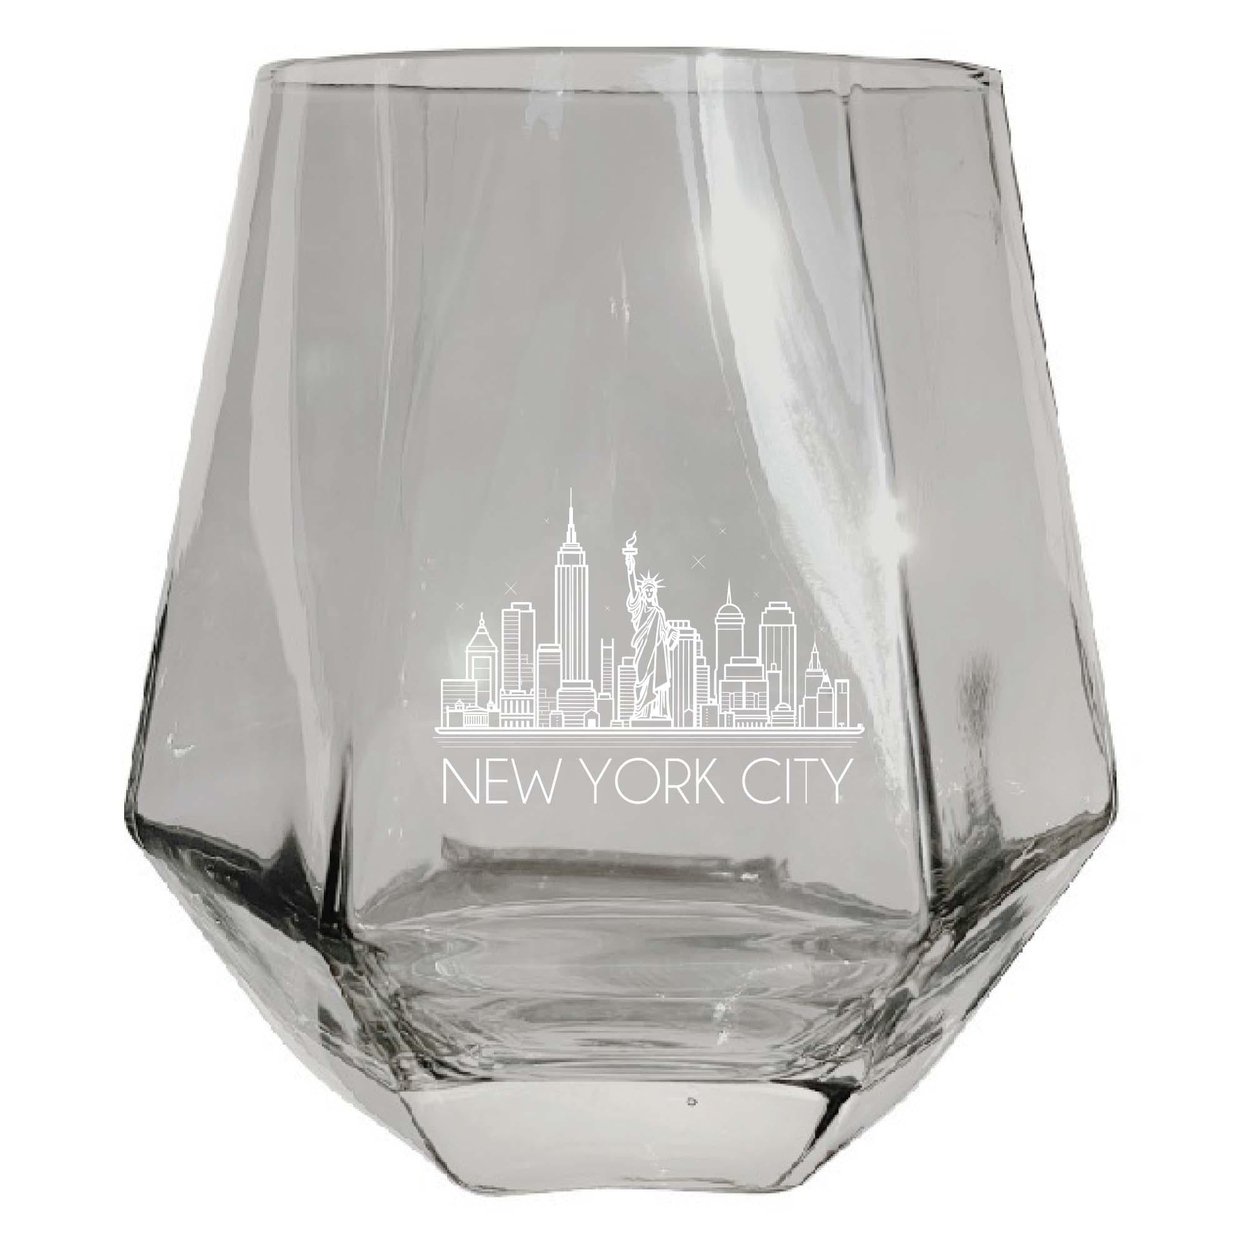 New York City Souvenir Wine Glass EngravedDiamond 15 Oz - Iridescent,,2-Pack